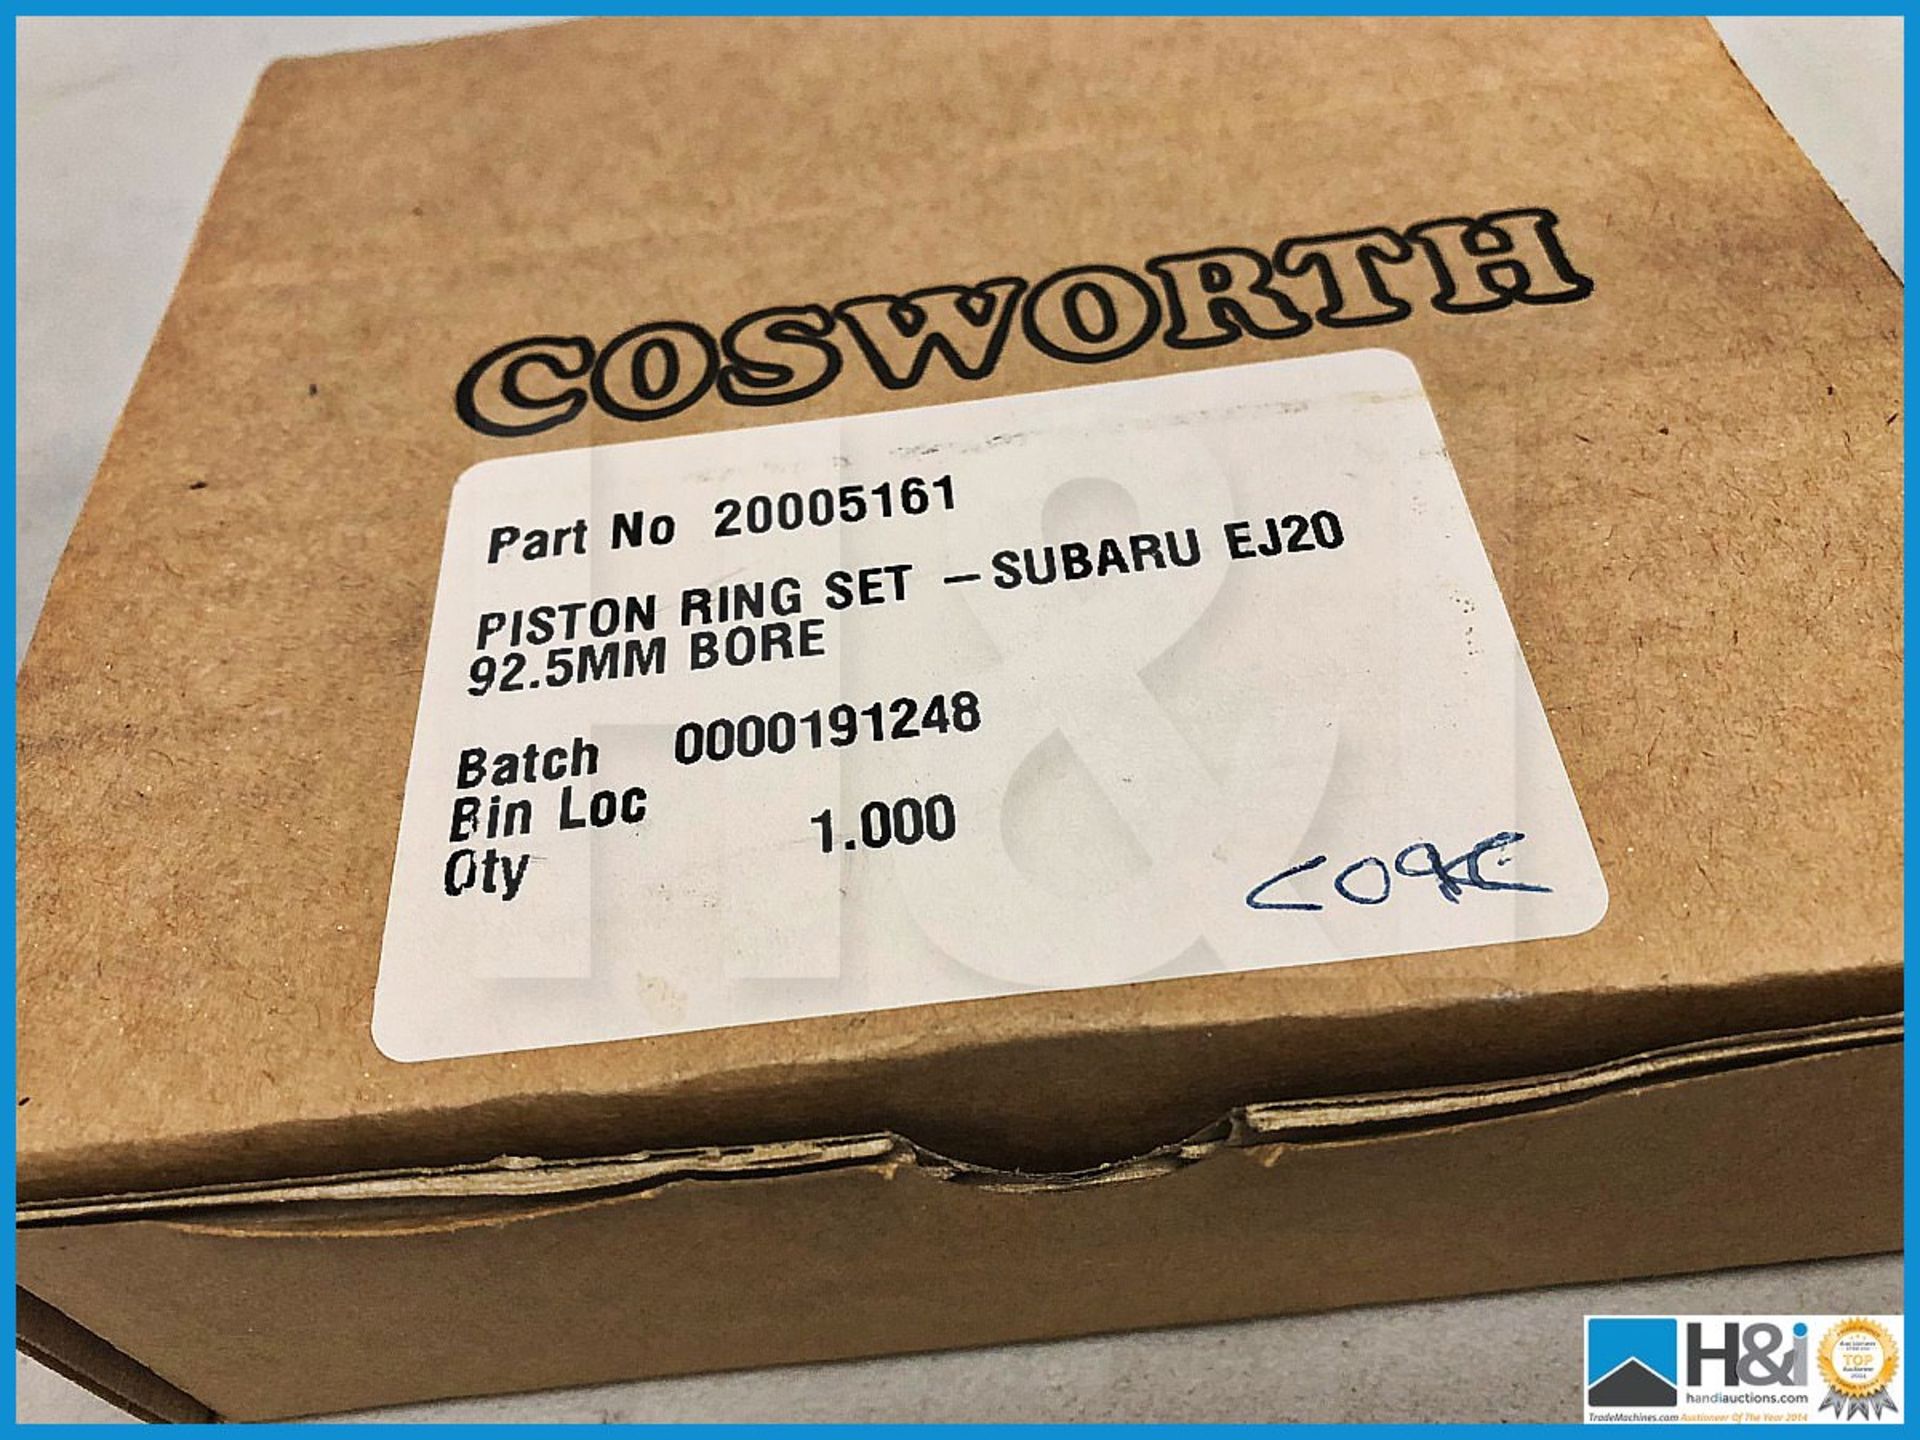 1 x Cosworth piston ring set - Subaru EJ20 92.5mm bore. Code: 20005161 - Image 2 of 2